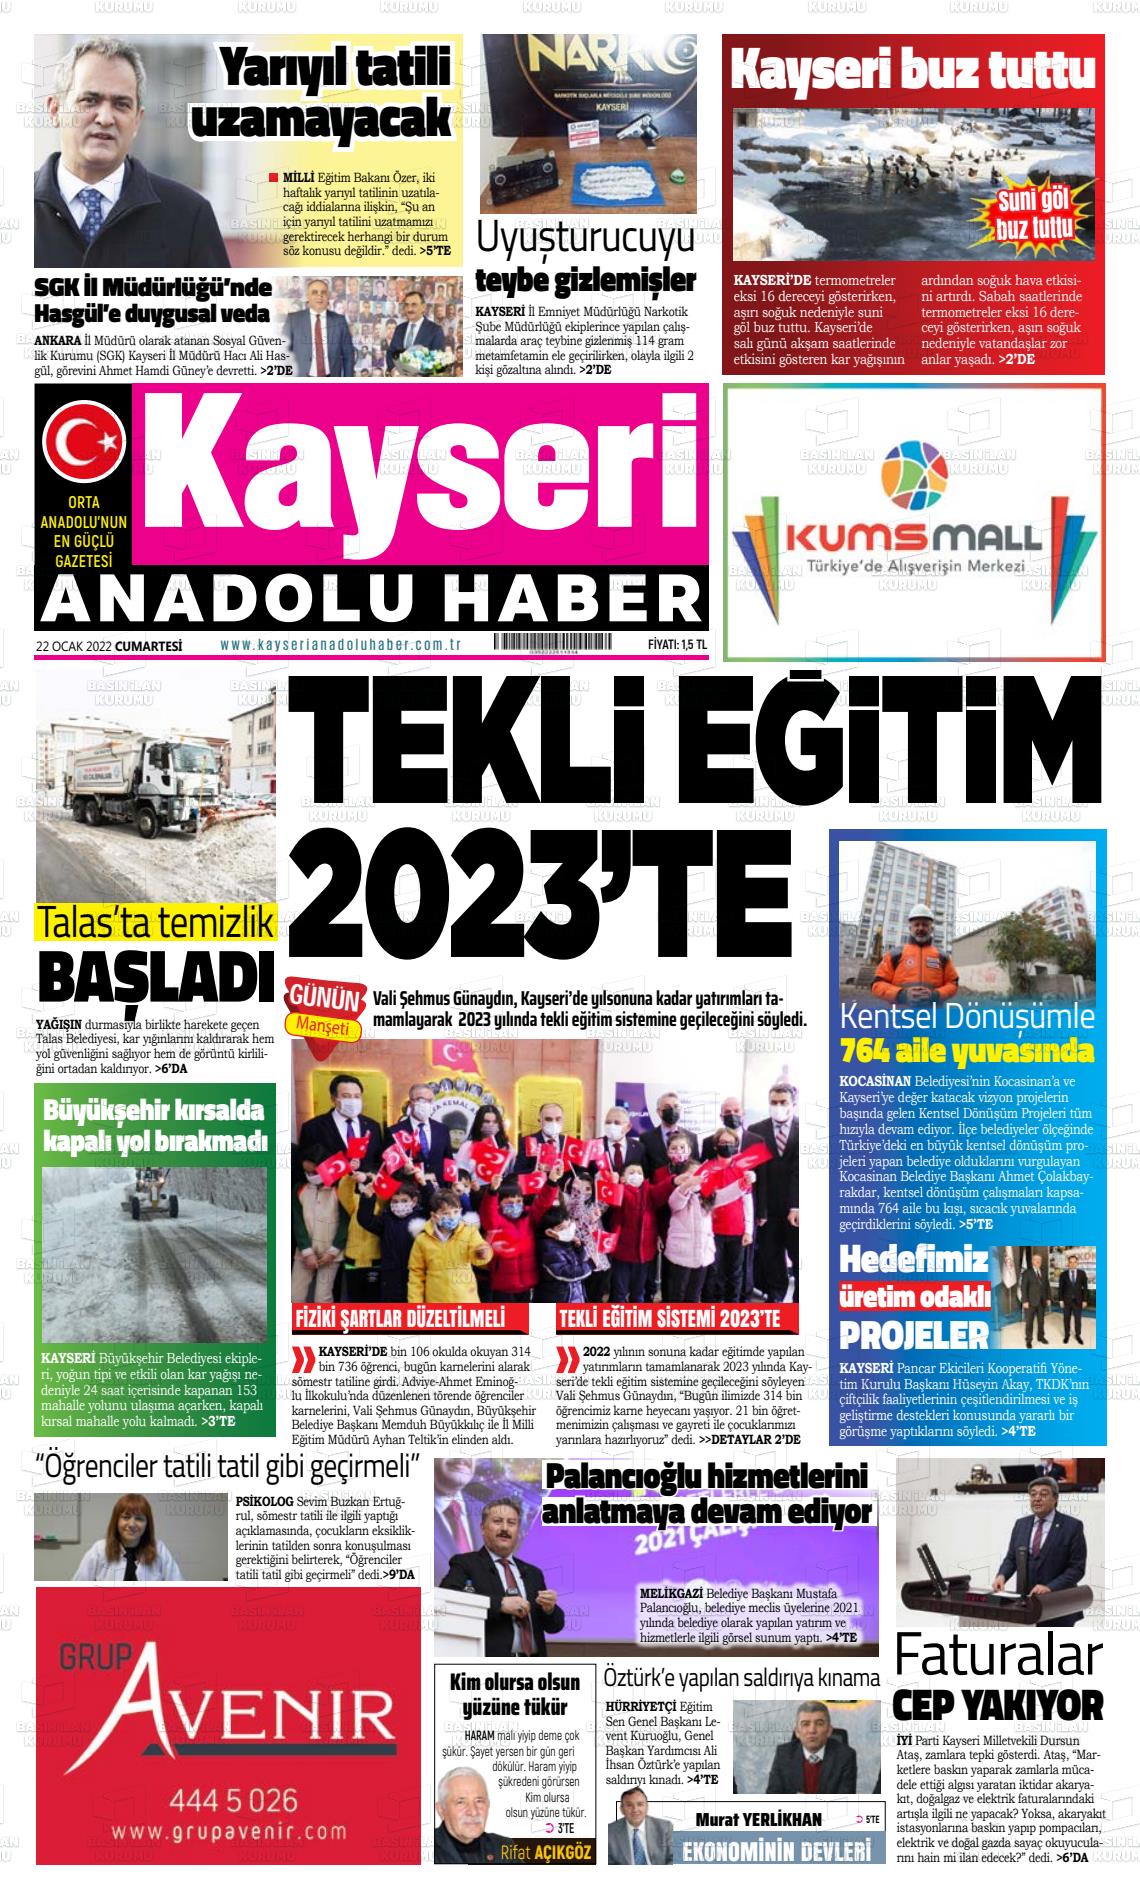 22 Ocak 2022 Kayseri Anadolu Haber Gazete Manşeti